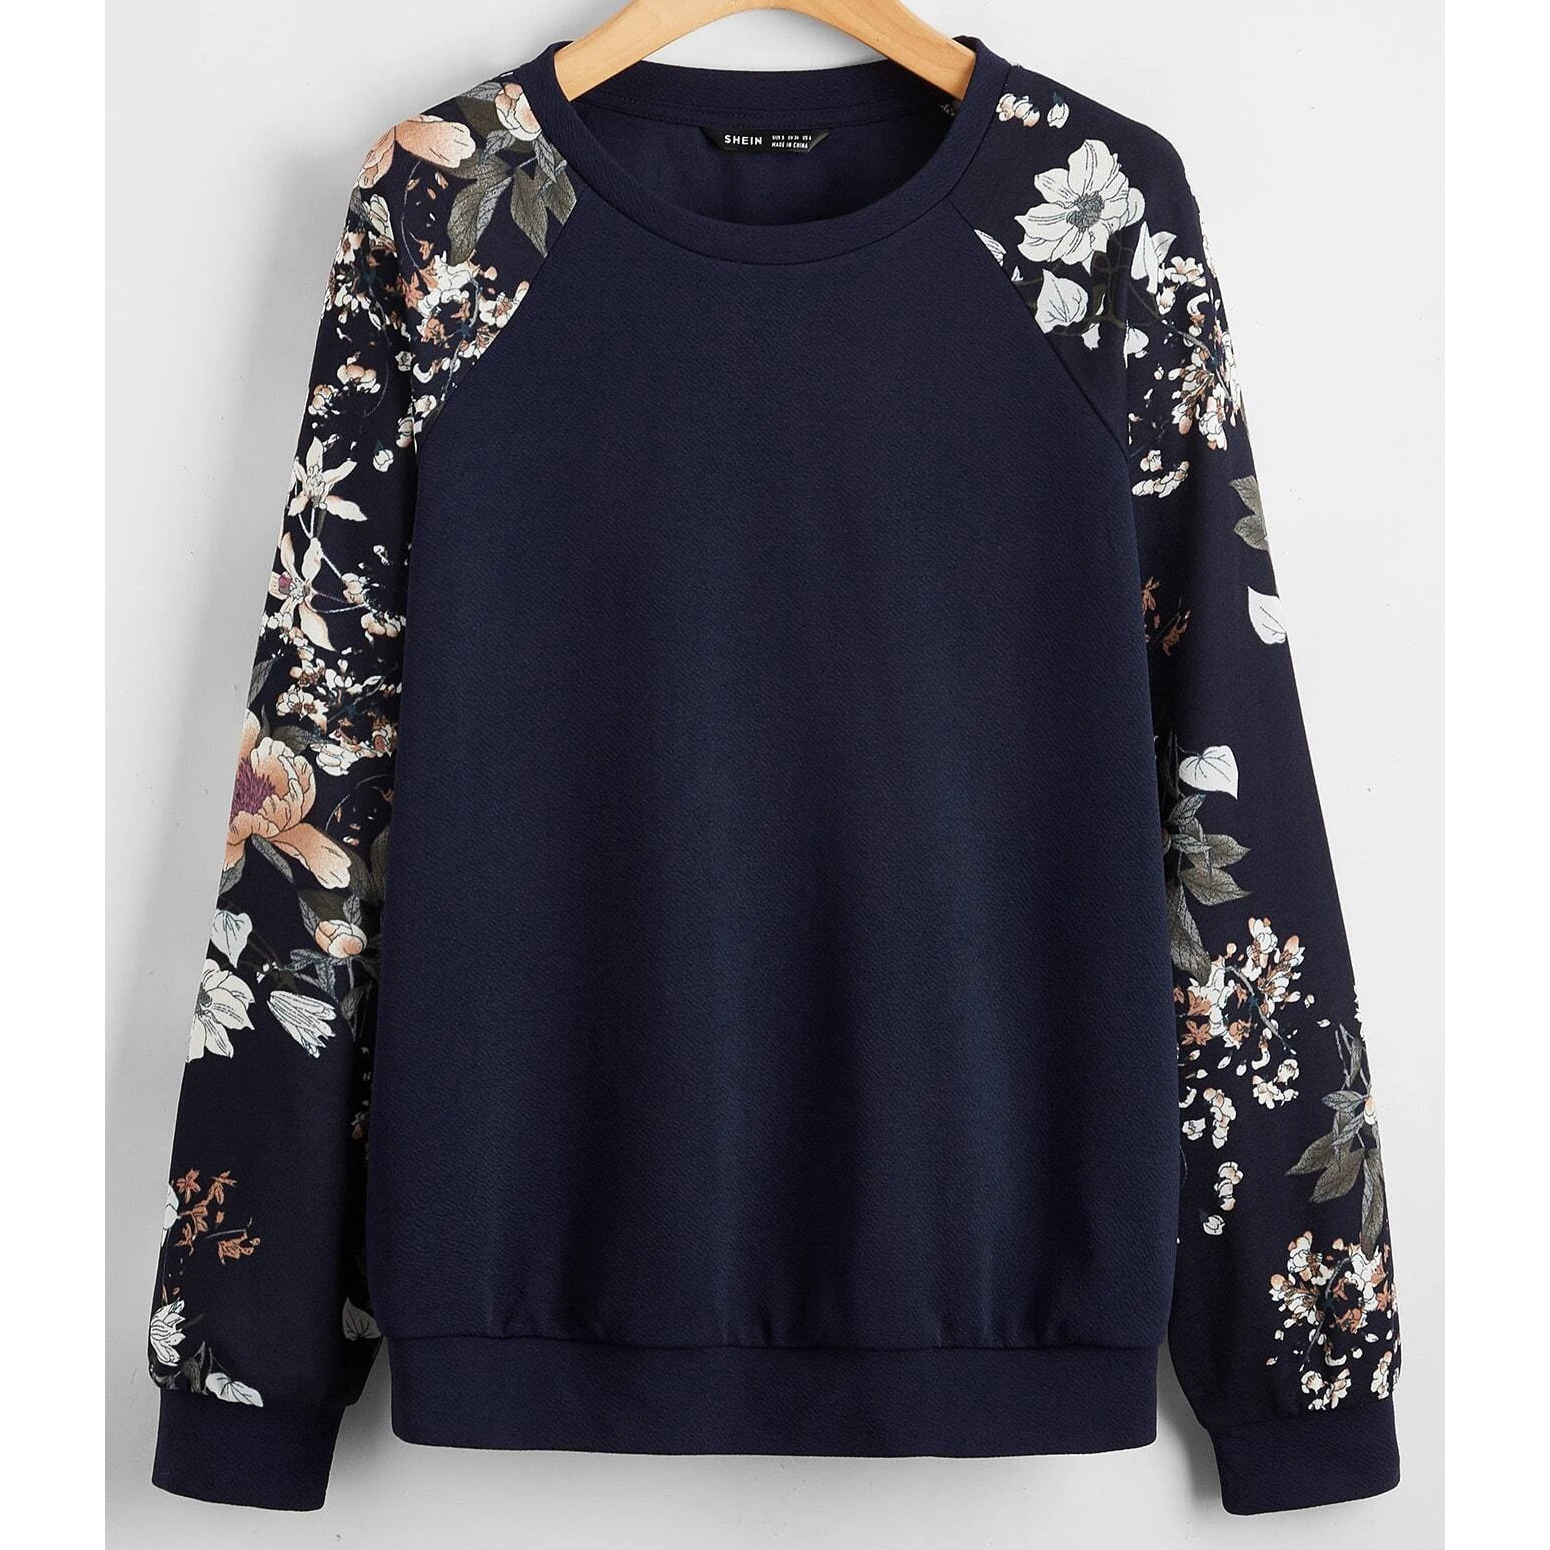 Floral Raglan Sleeve Pullover - Large(8/10)